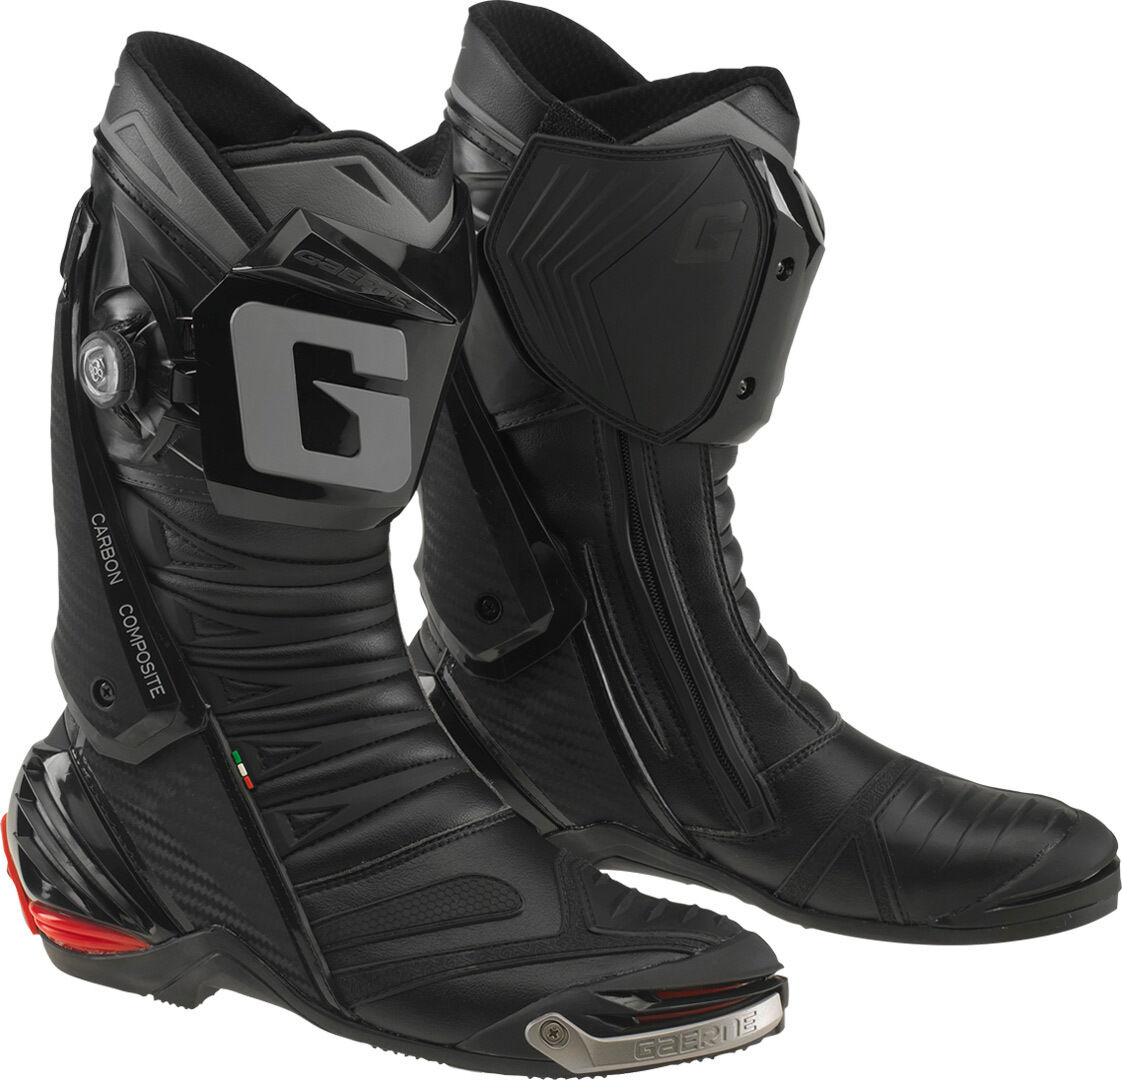 Gaerne Gp1 Evo Motorcycle Boots  - Black